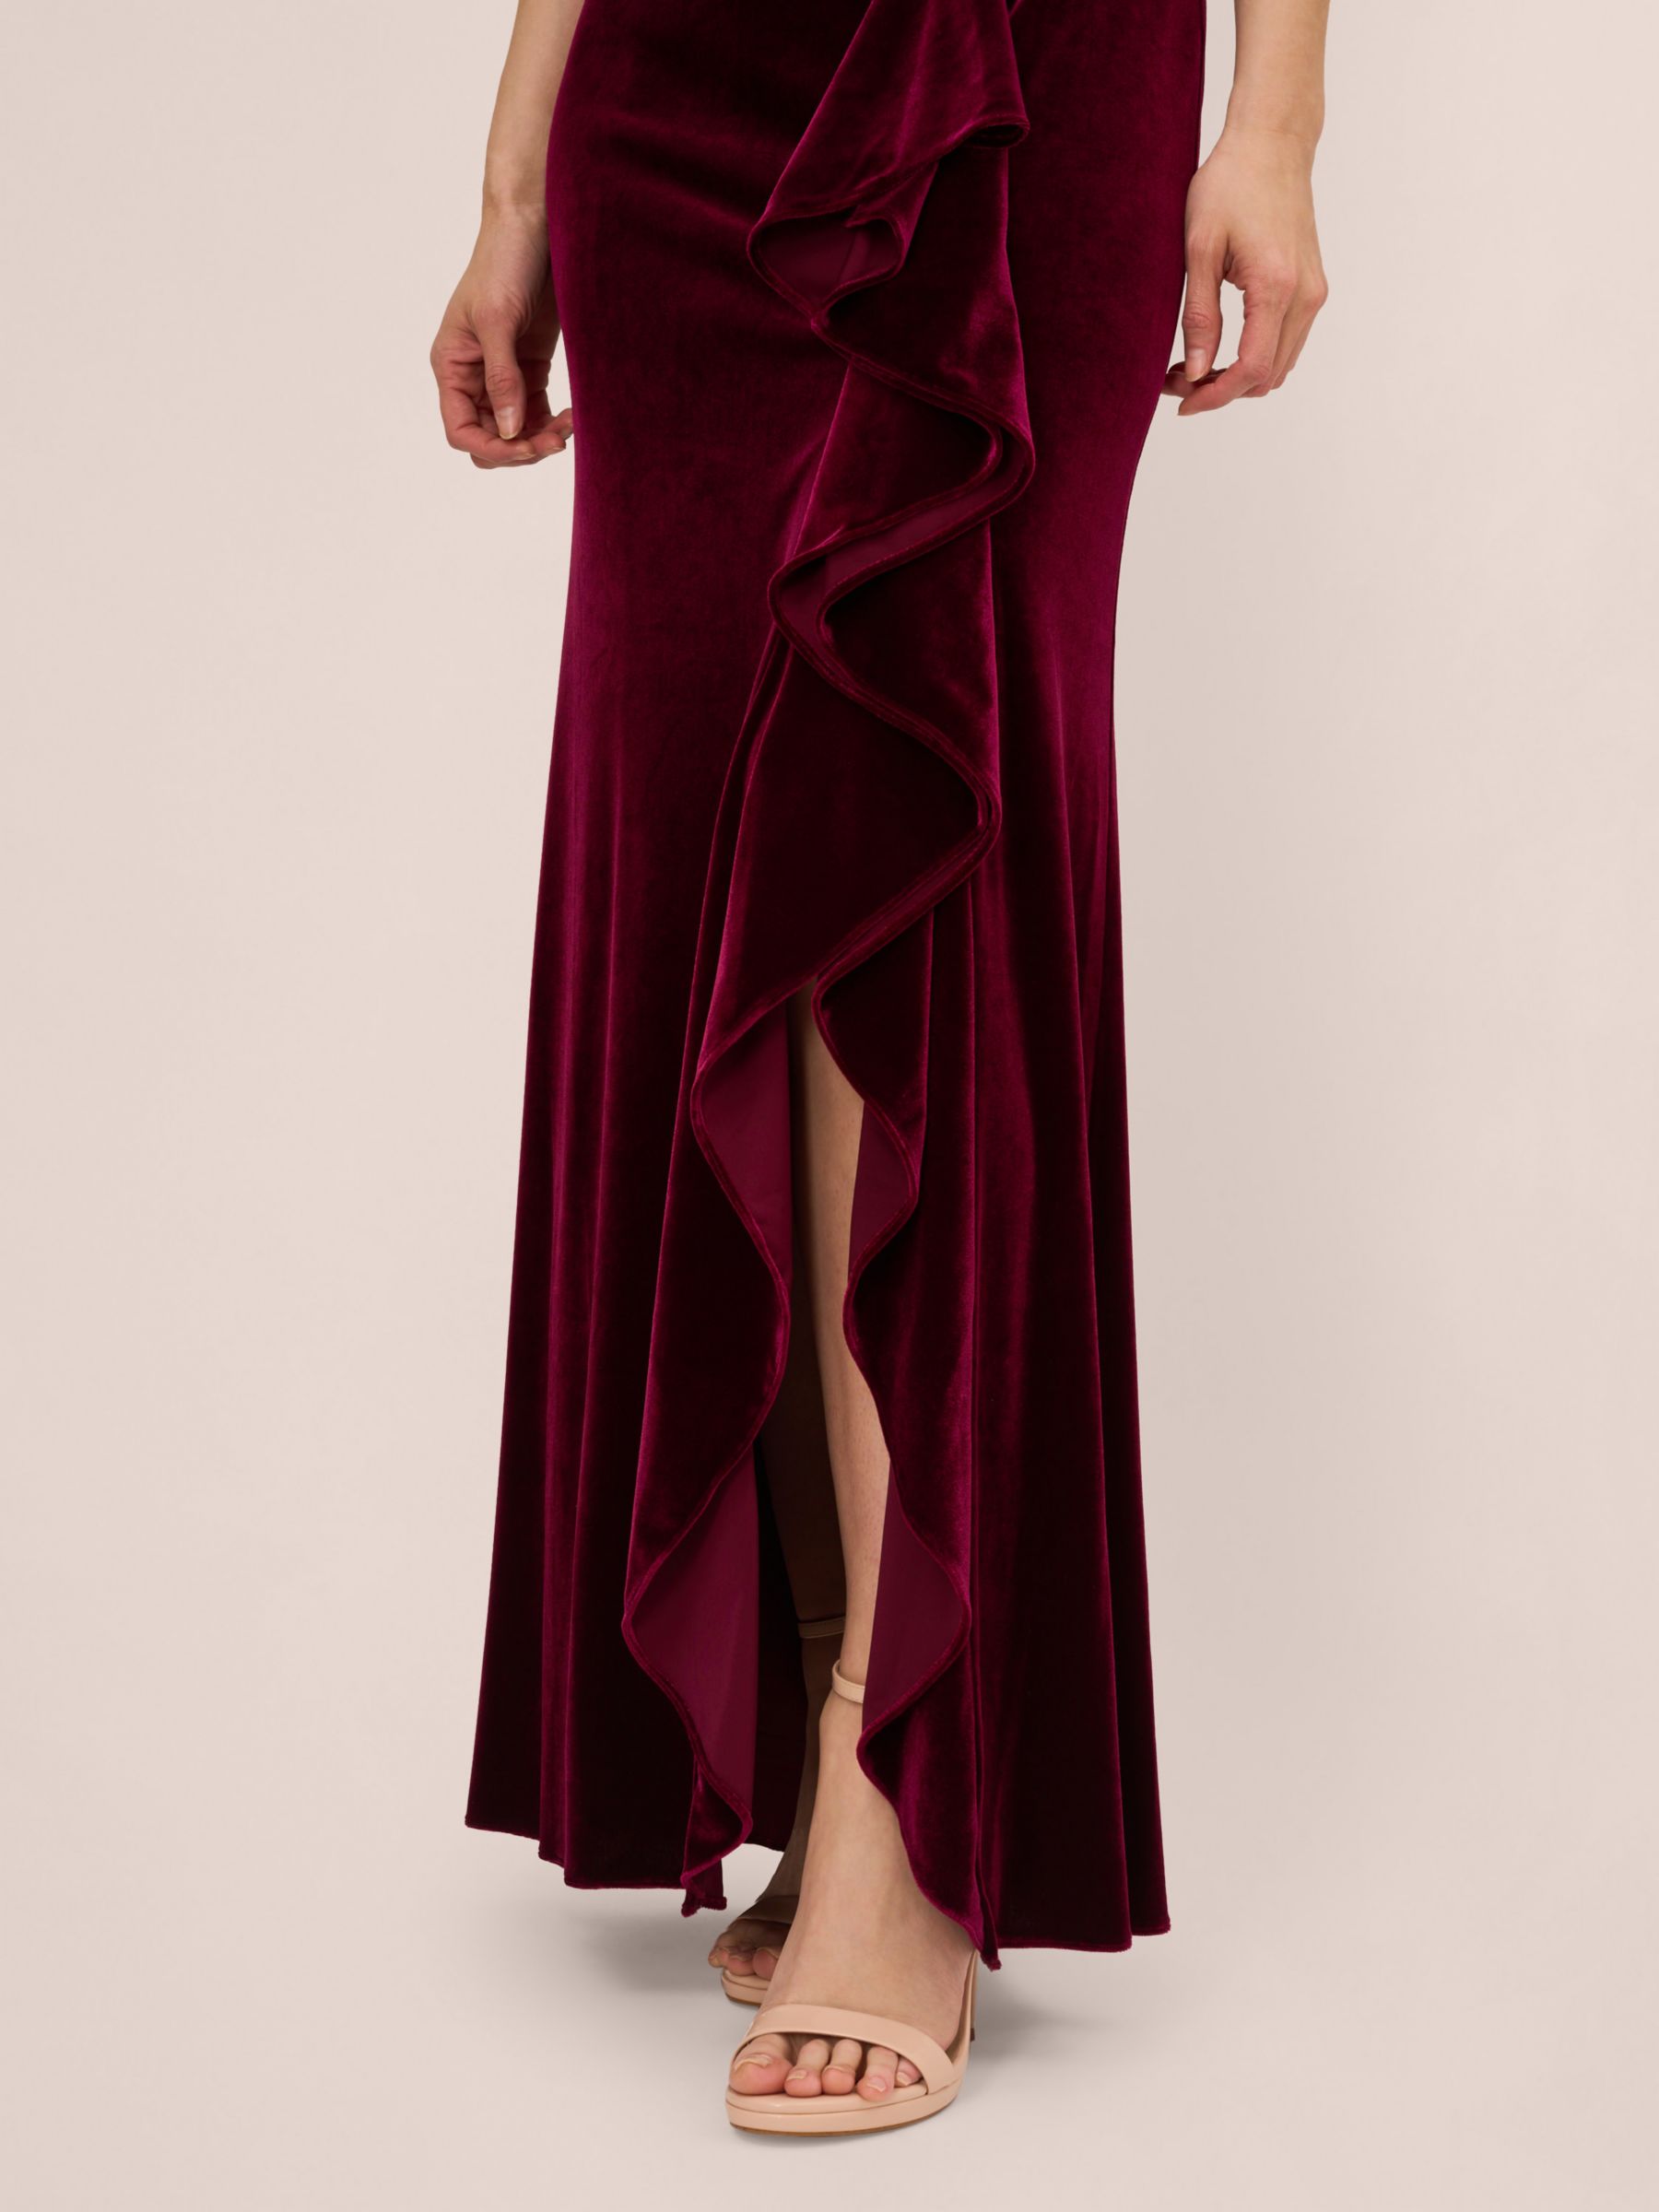 Adrianna Papell Velvet Ruffle Front Maxi Dress, Burgundy, 6